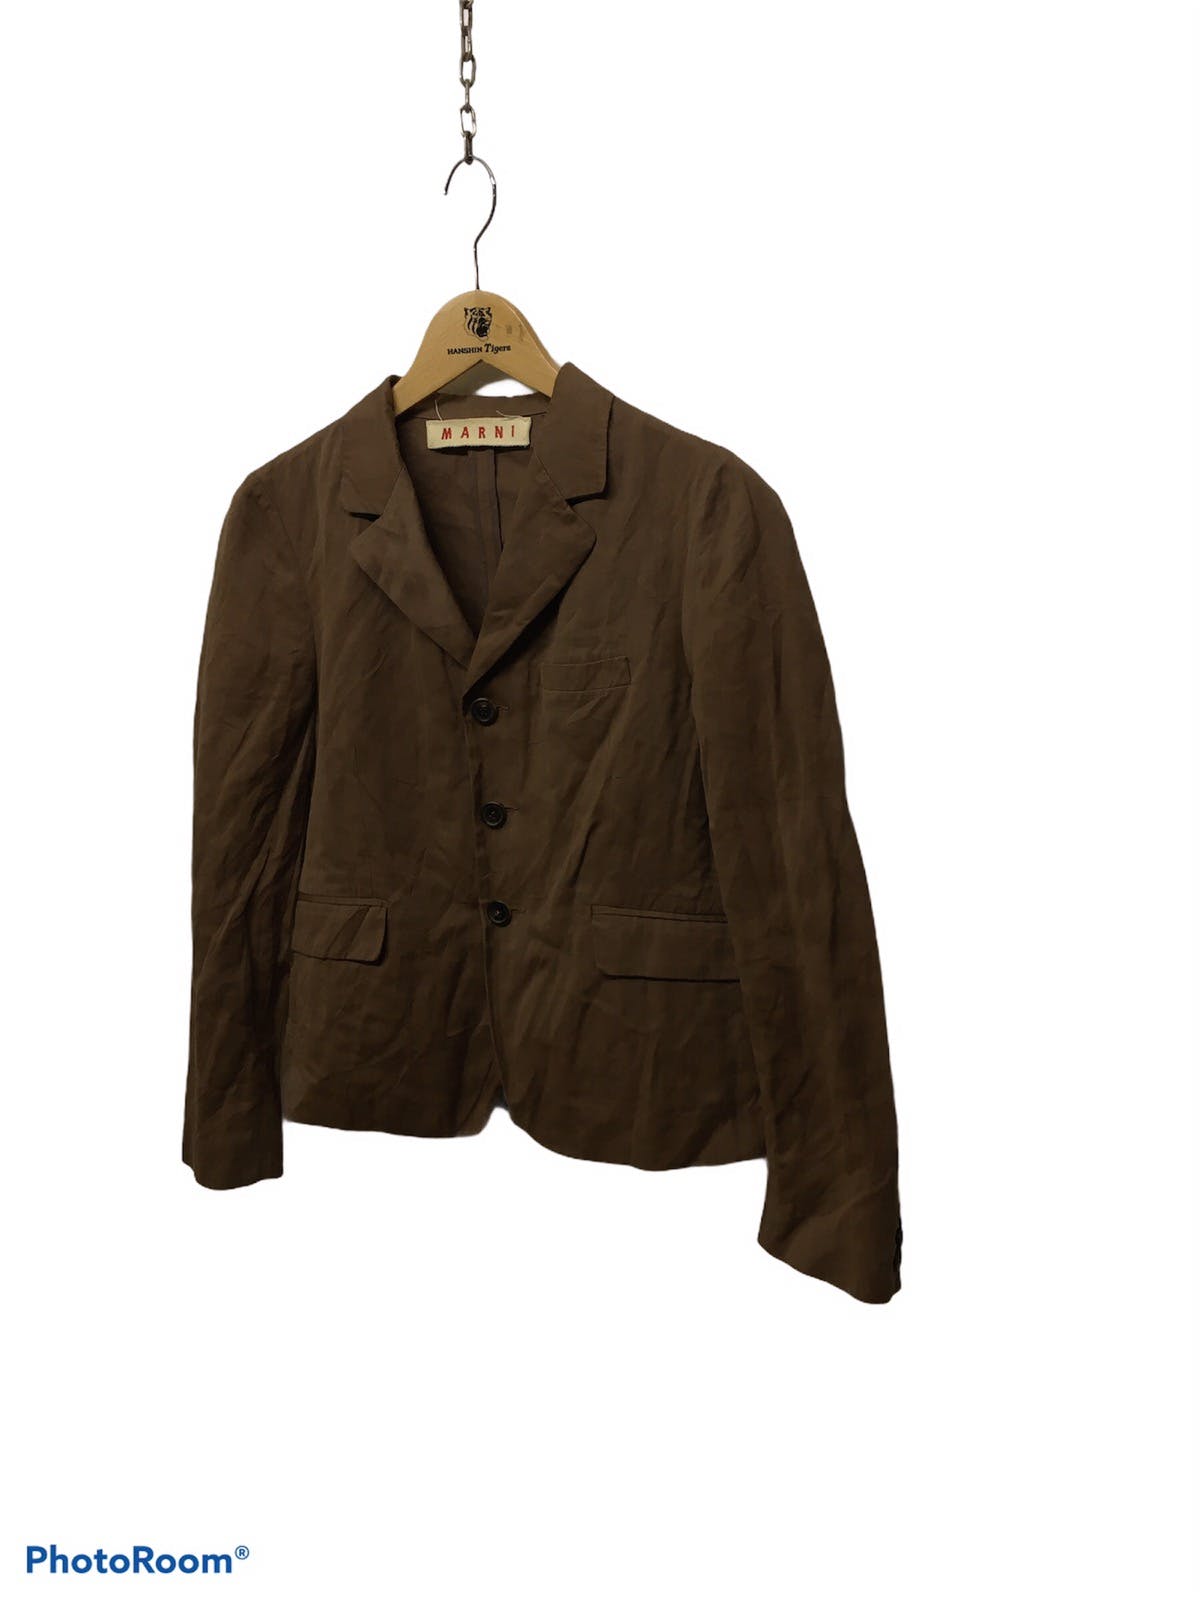 Marni Marni light jacket/coat | mugatamugaru | REVERSIBLE